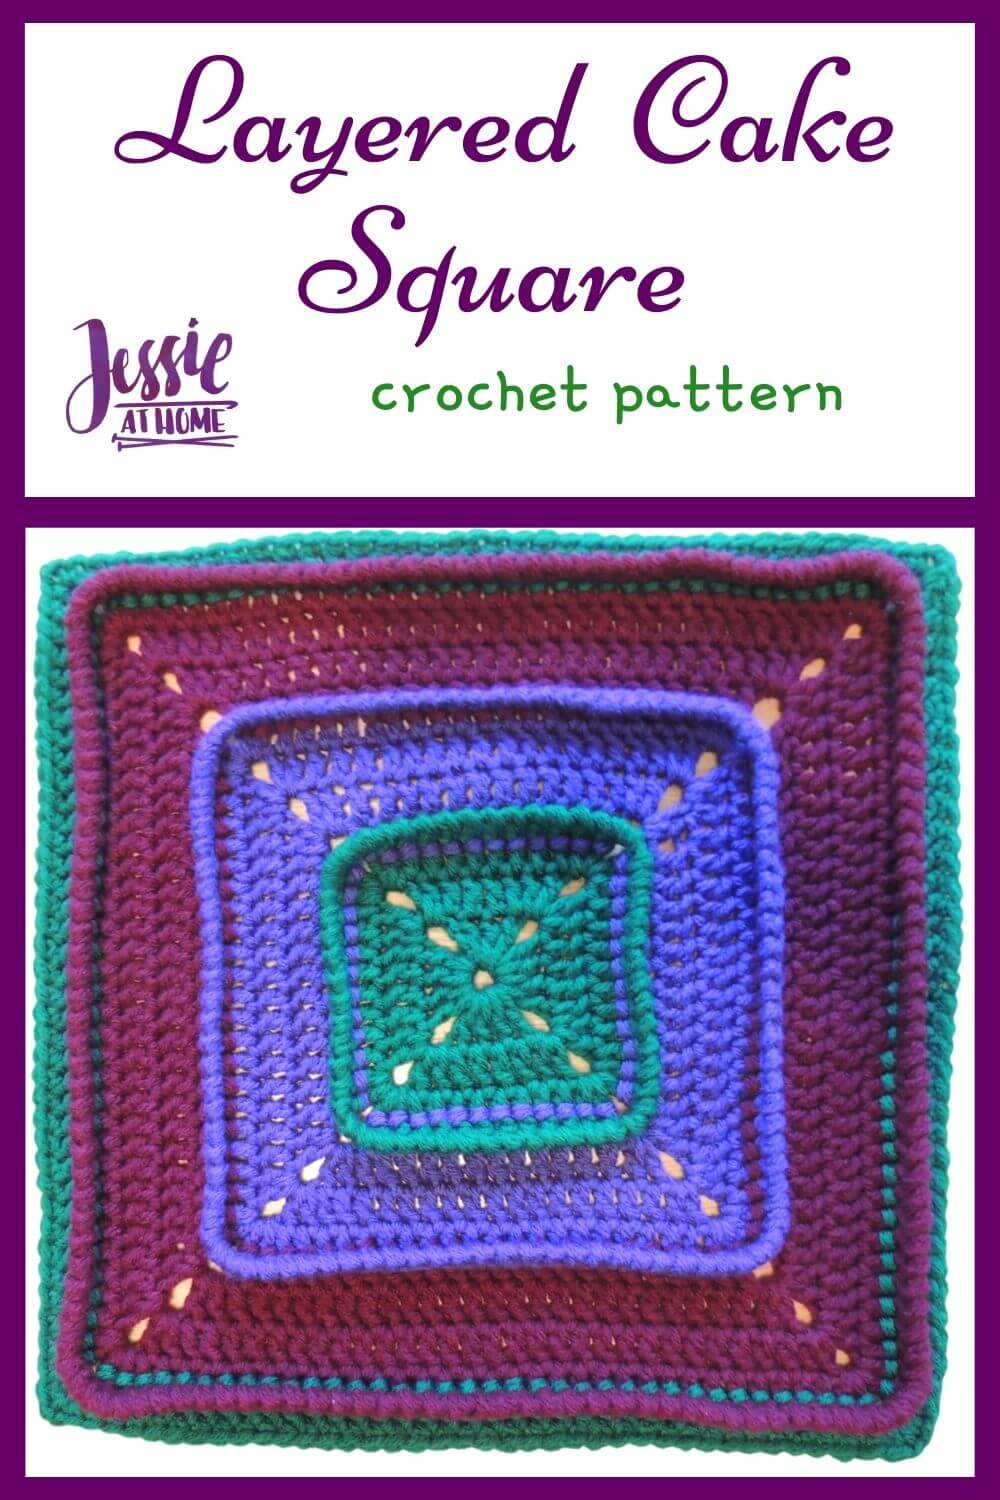 Layered Cake Square - Dimensional Square Free Crochet Pattern